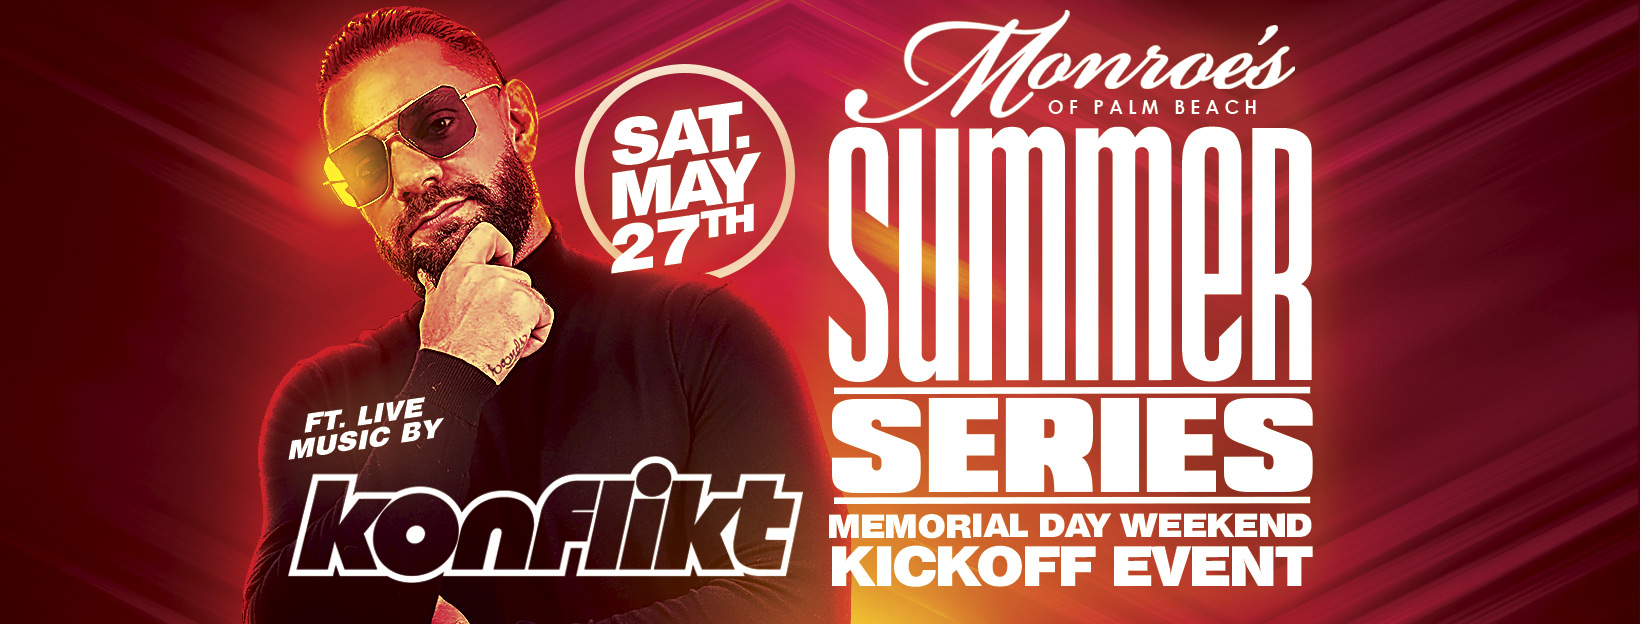 Monroe's Summer Series Music Artist Event May 27th Featuring DJ Konflikt